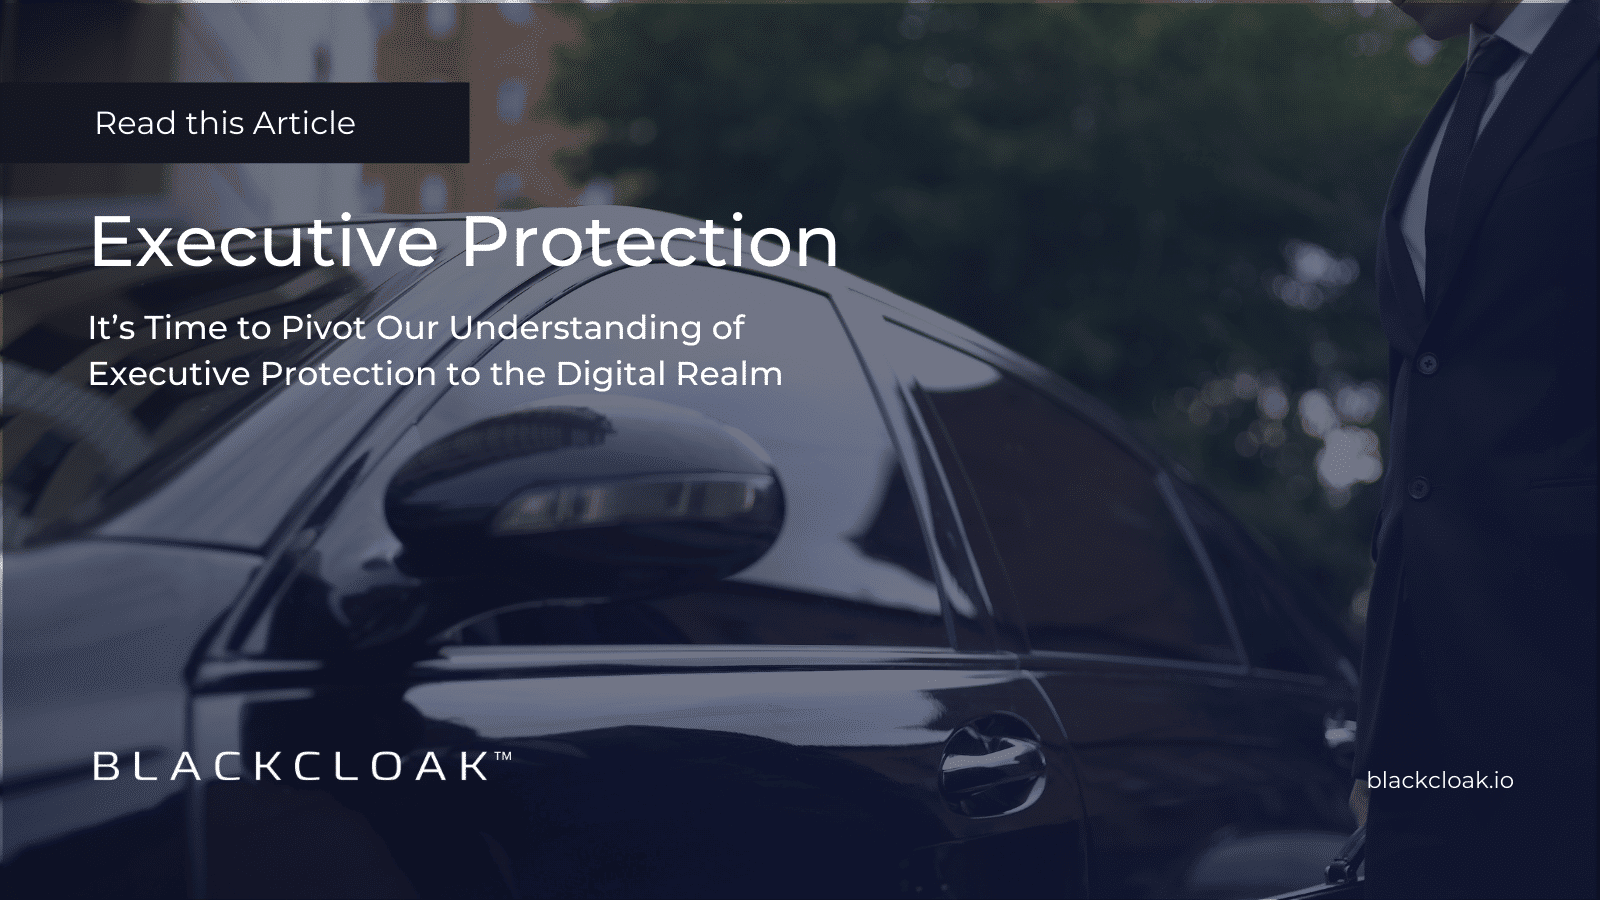 BlackCloak Executive Protection Blog Post